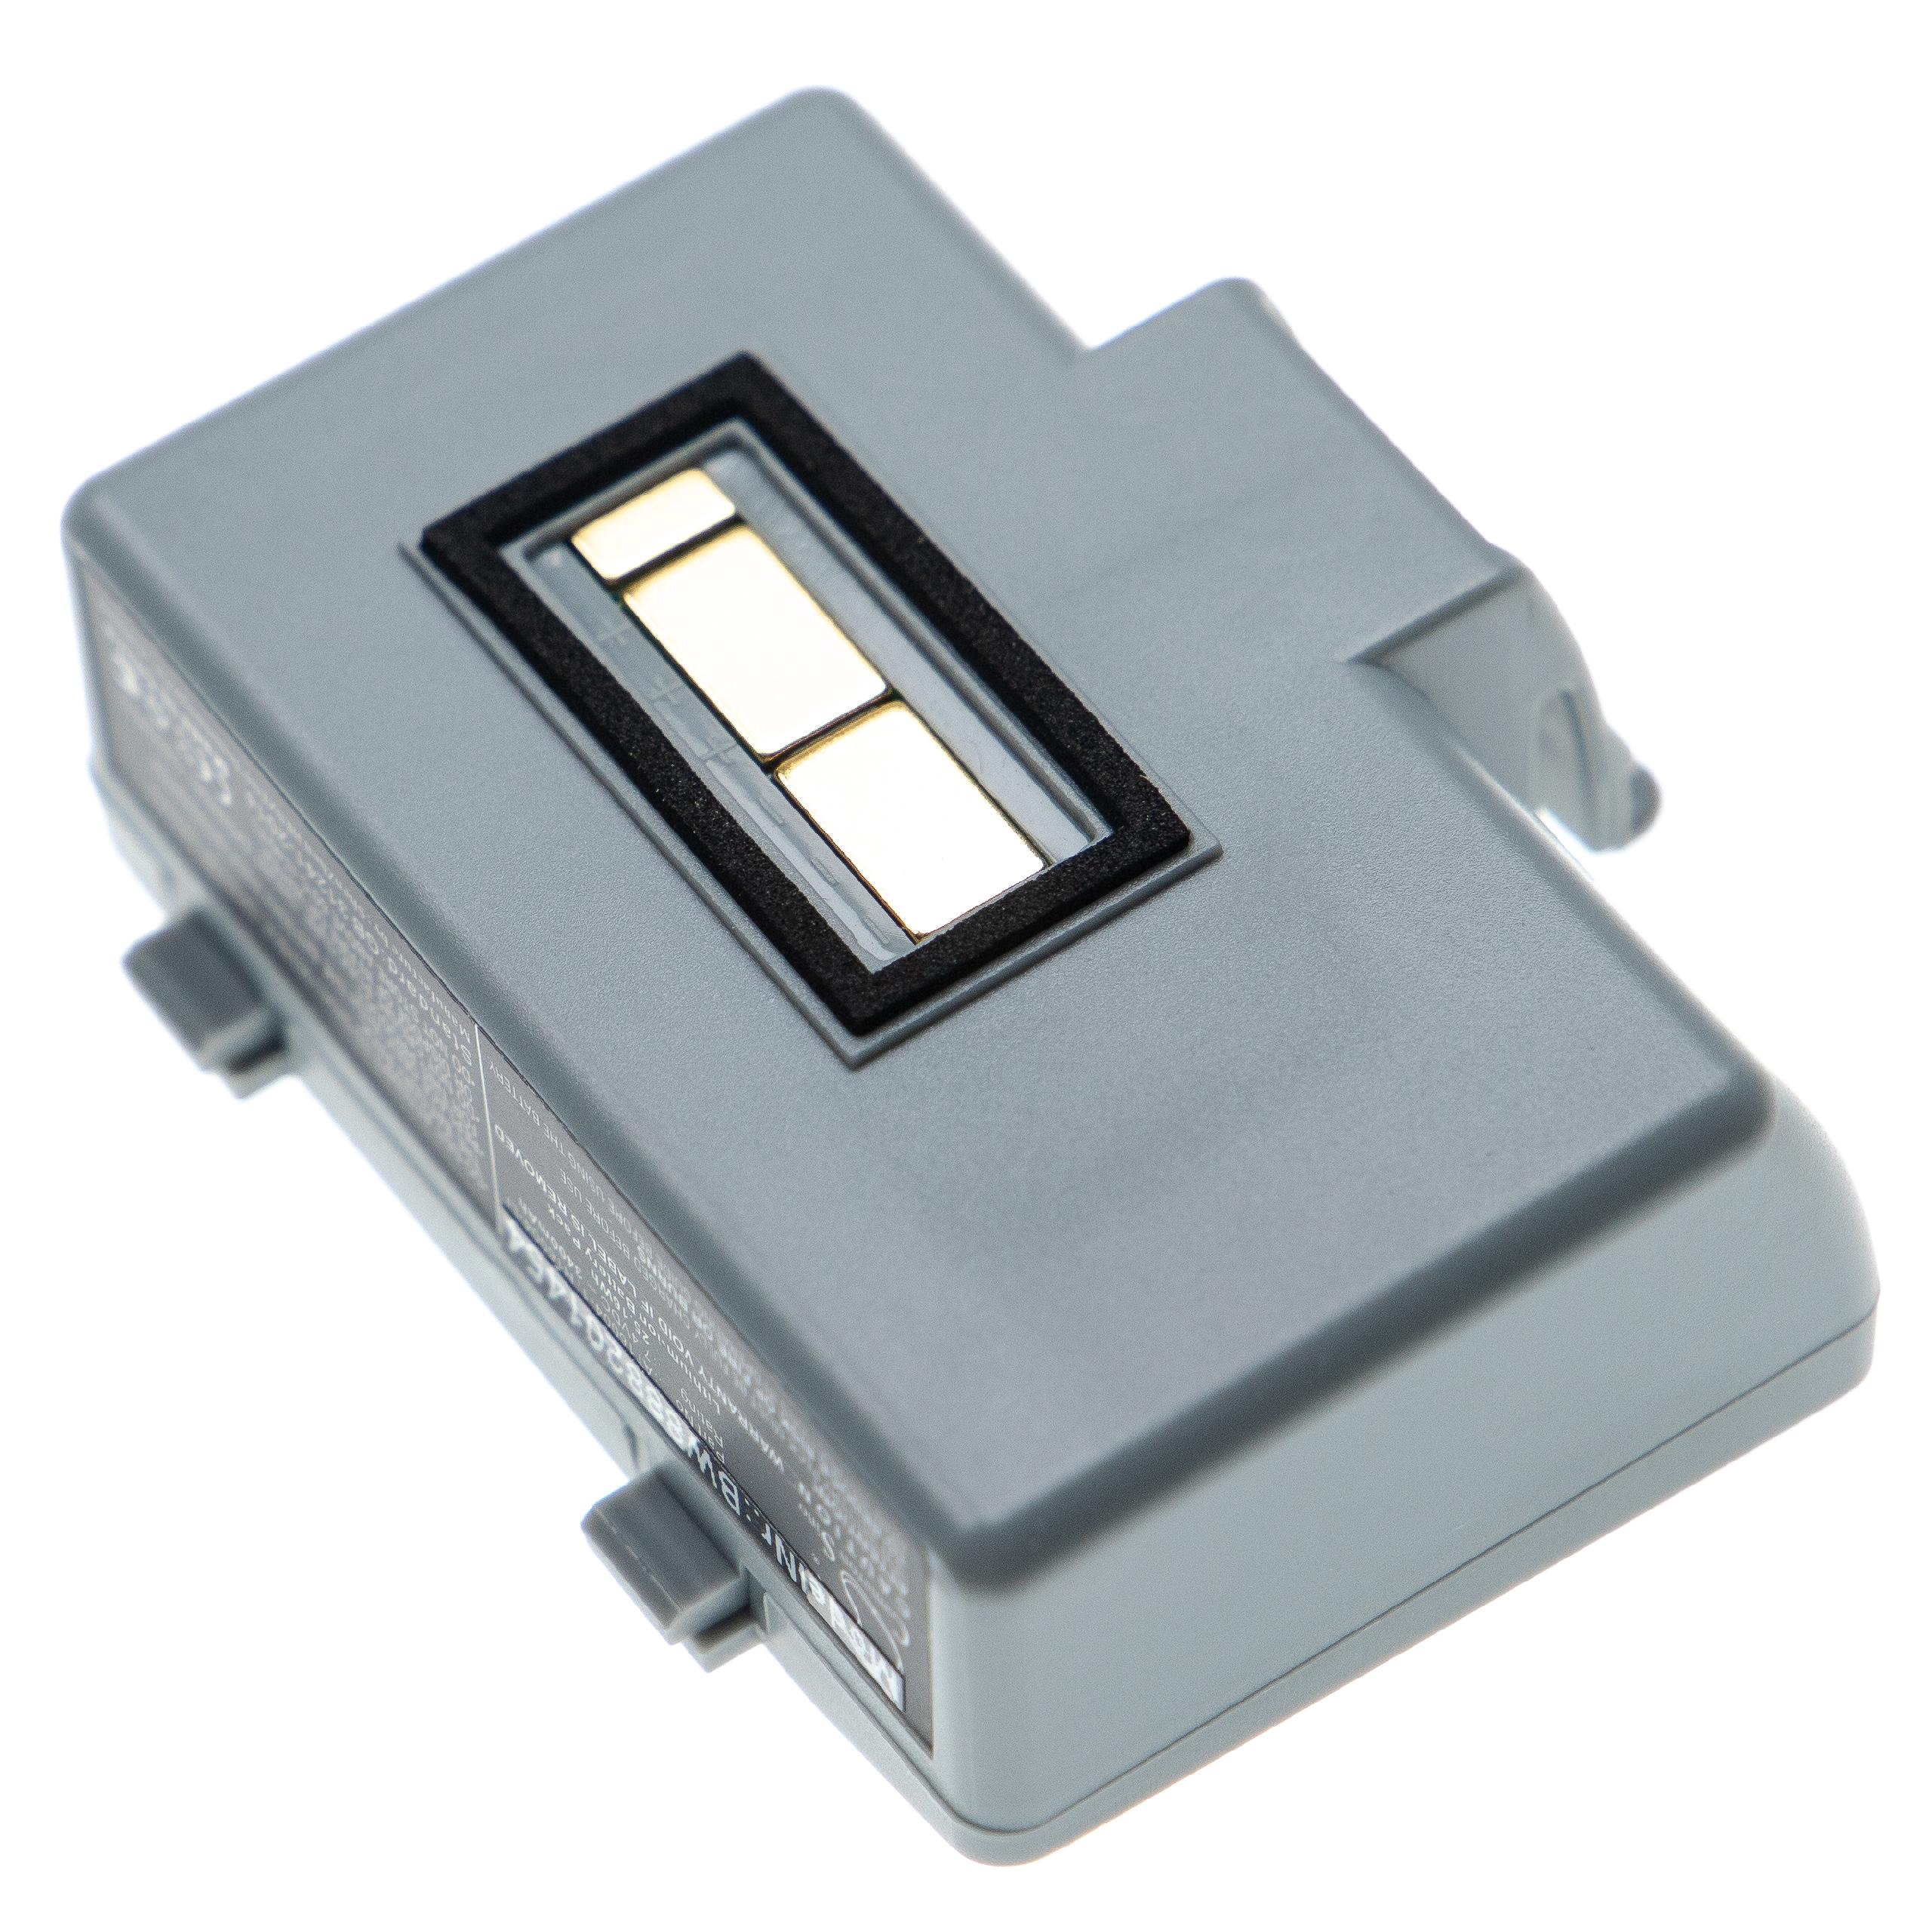 Akumulator do drukarki / drukarki etykiet zamiennik Zebra AT16004-1, H16004-LI - 3400 mAh 7,4 V Li-Ion